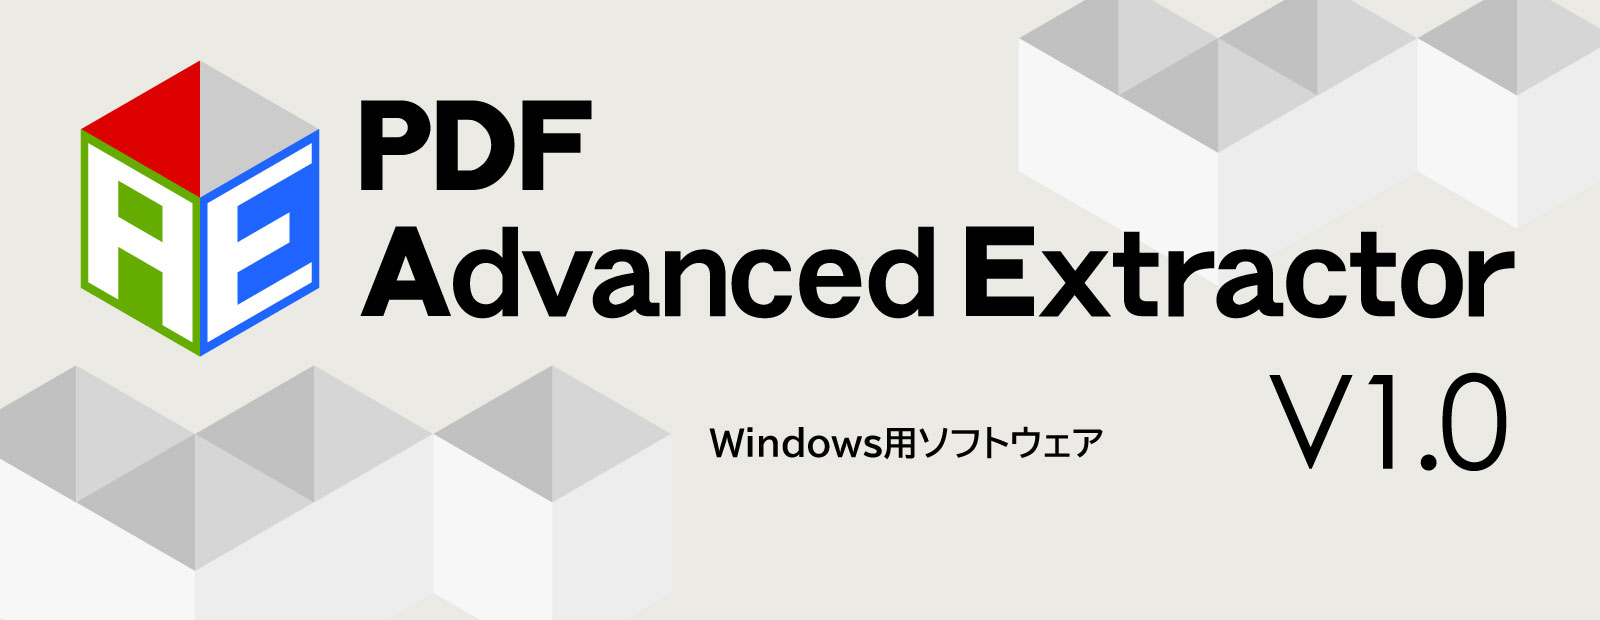 PDF Advanced Extractor のロゴ